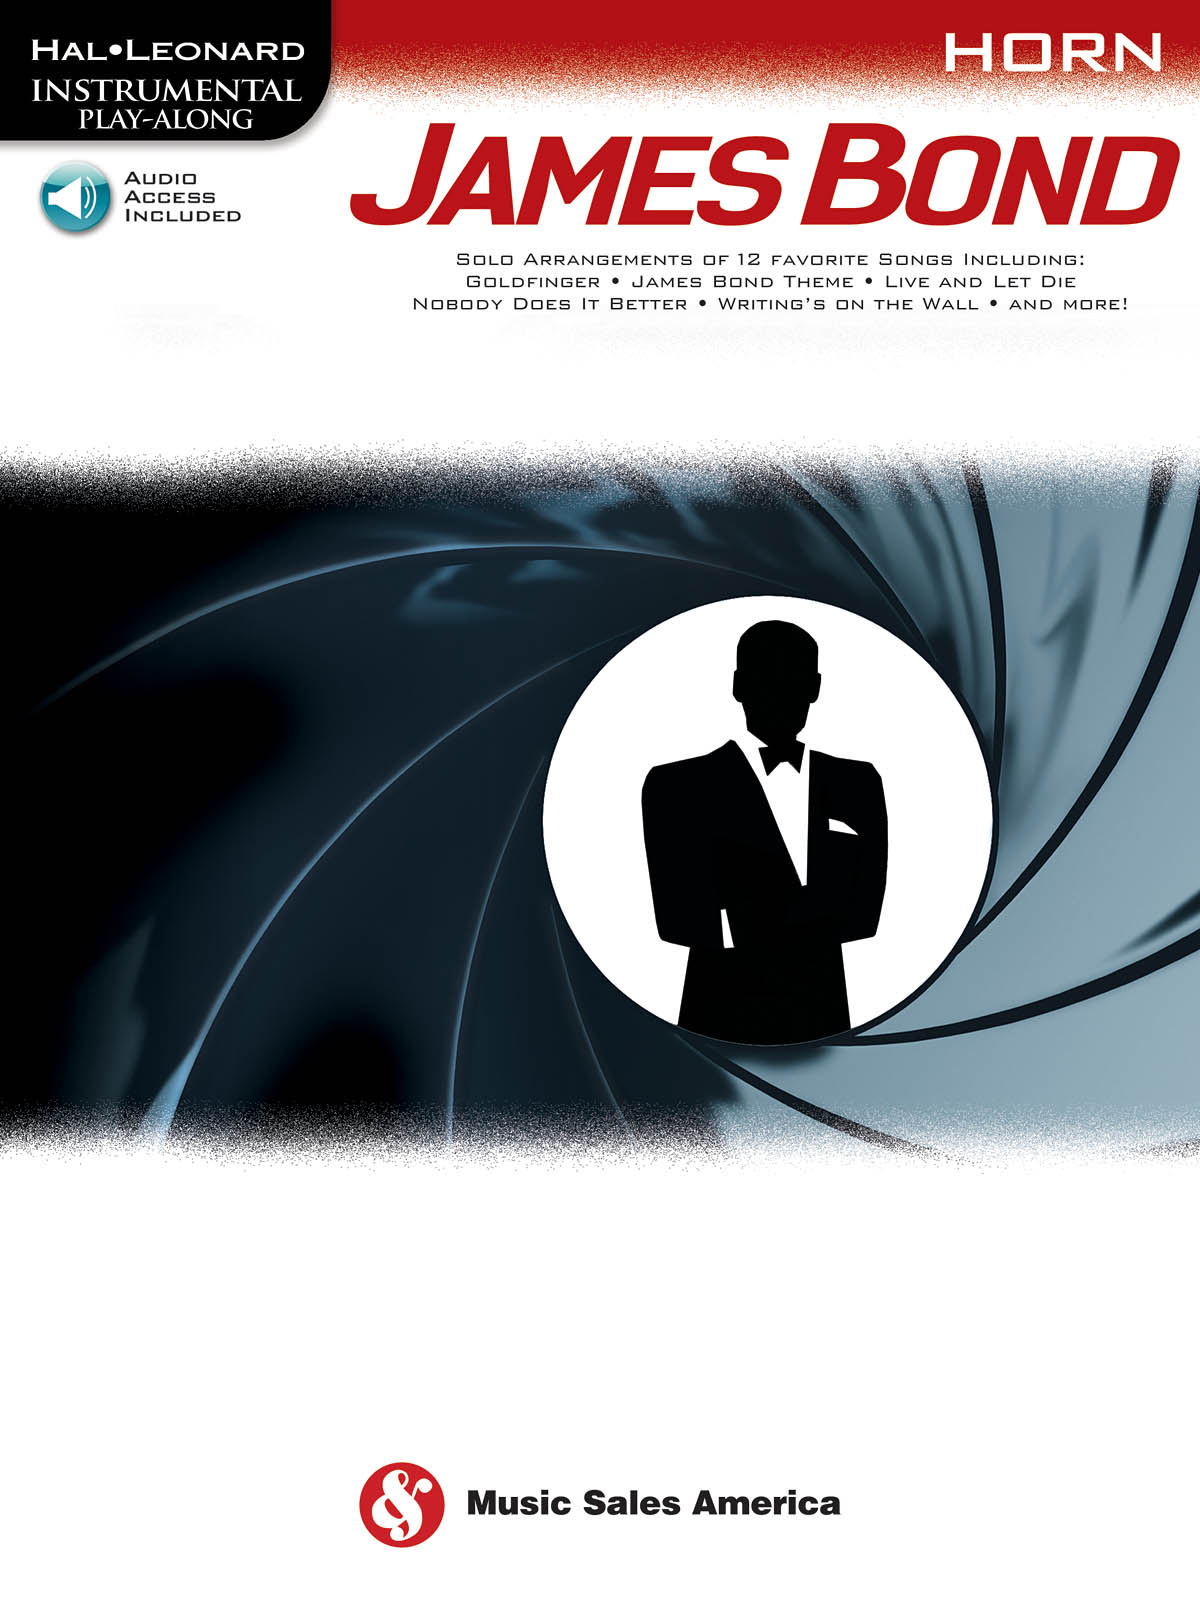 James Bond: Horn: Instrumental Album